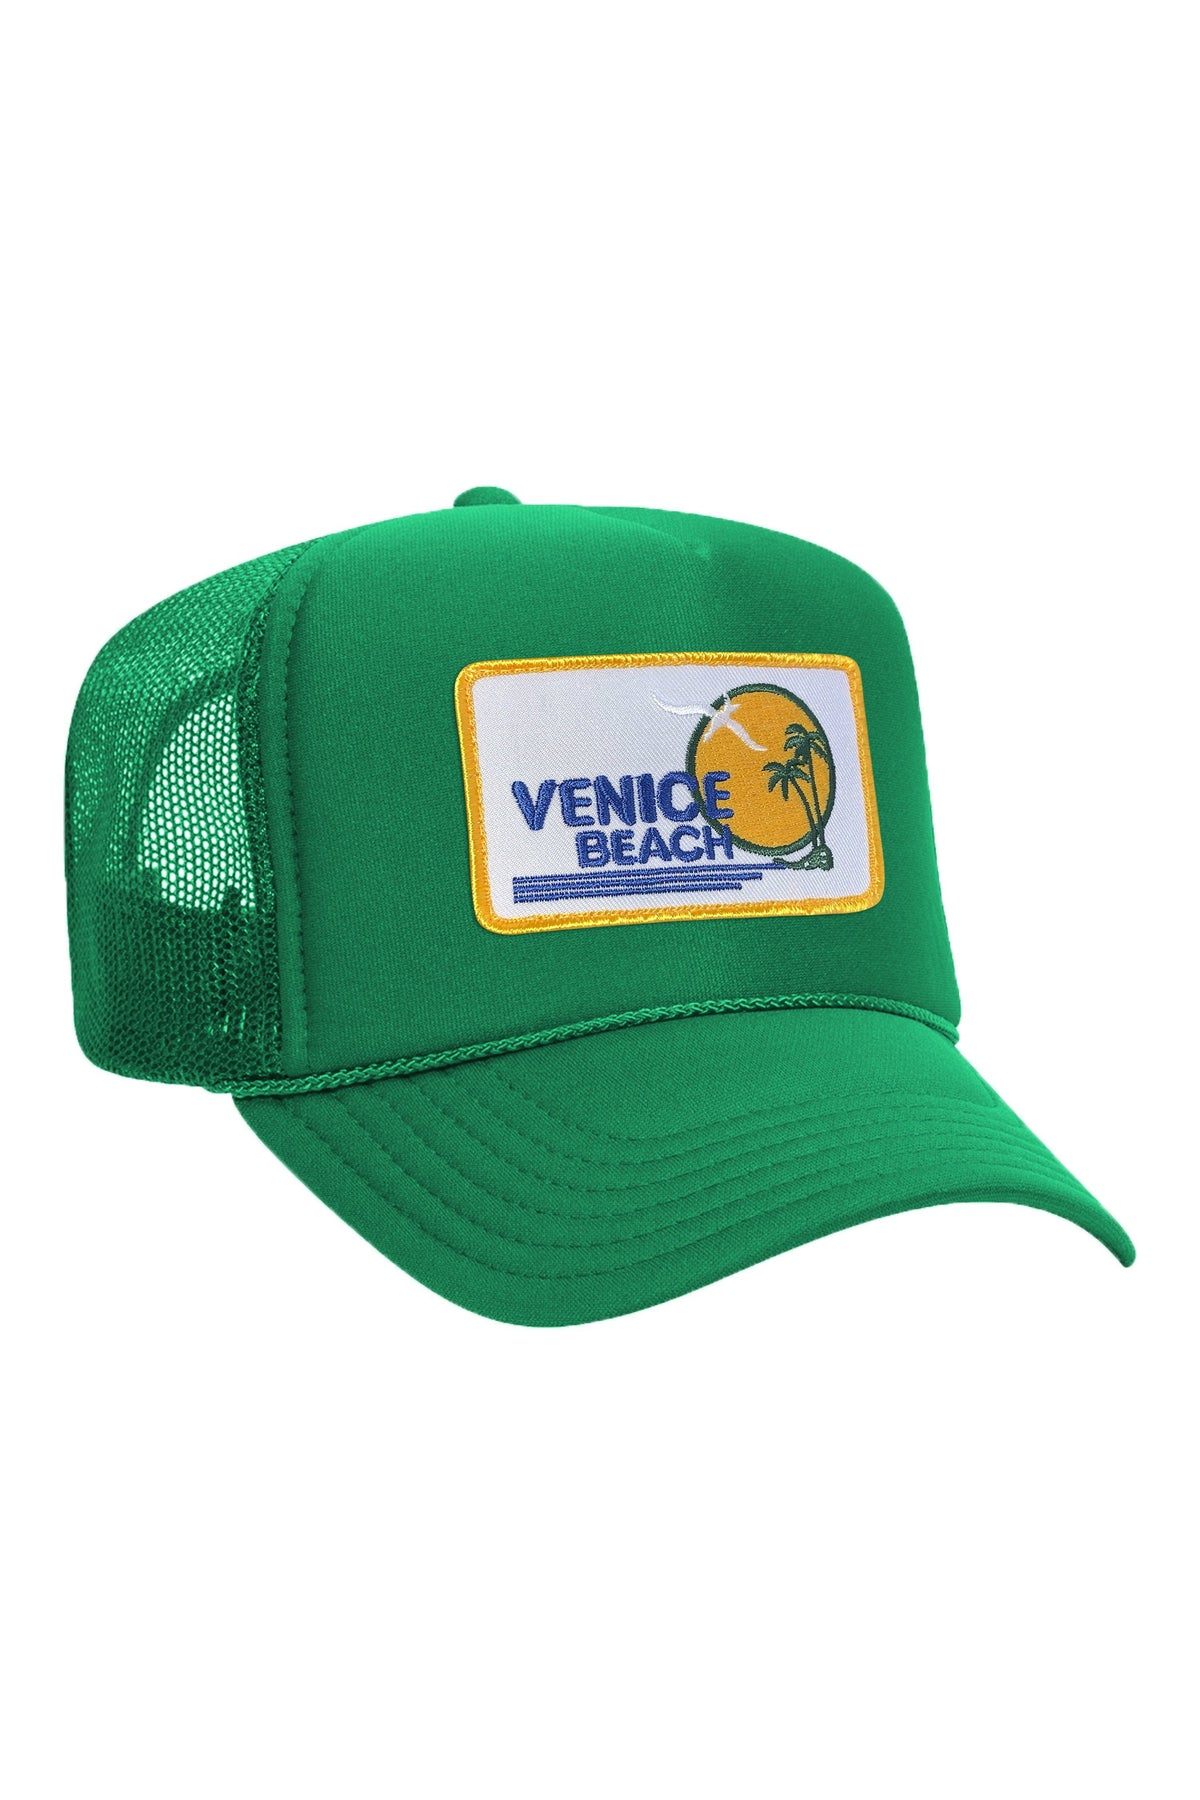 VENICE BEACH VINTAGE TRUCKER HAT HATS Aviator Nation OS KELLY GREEN 